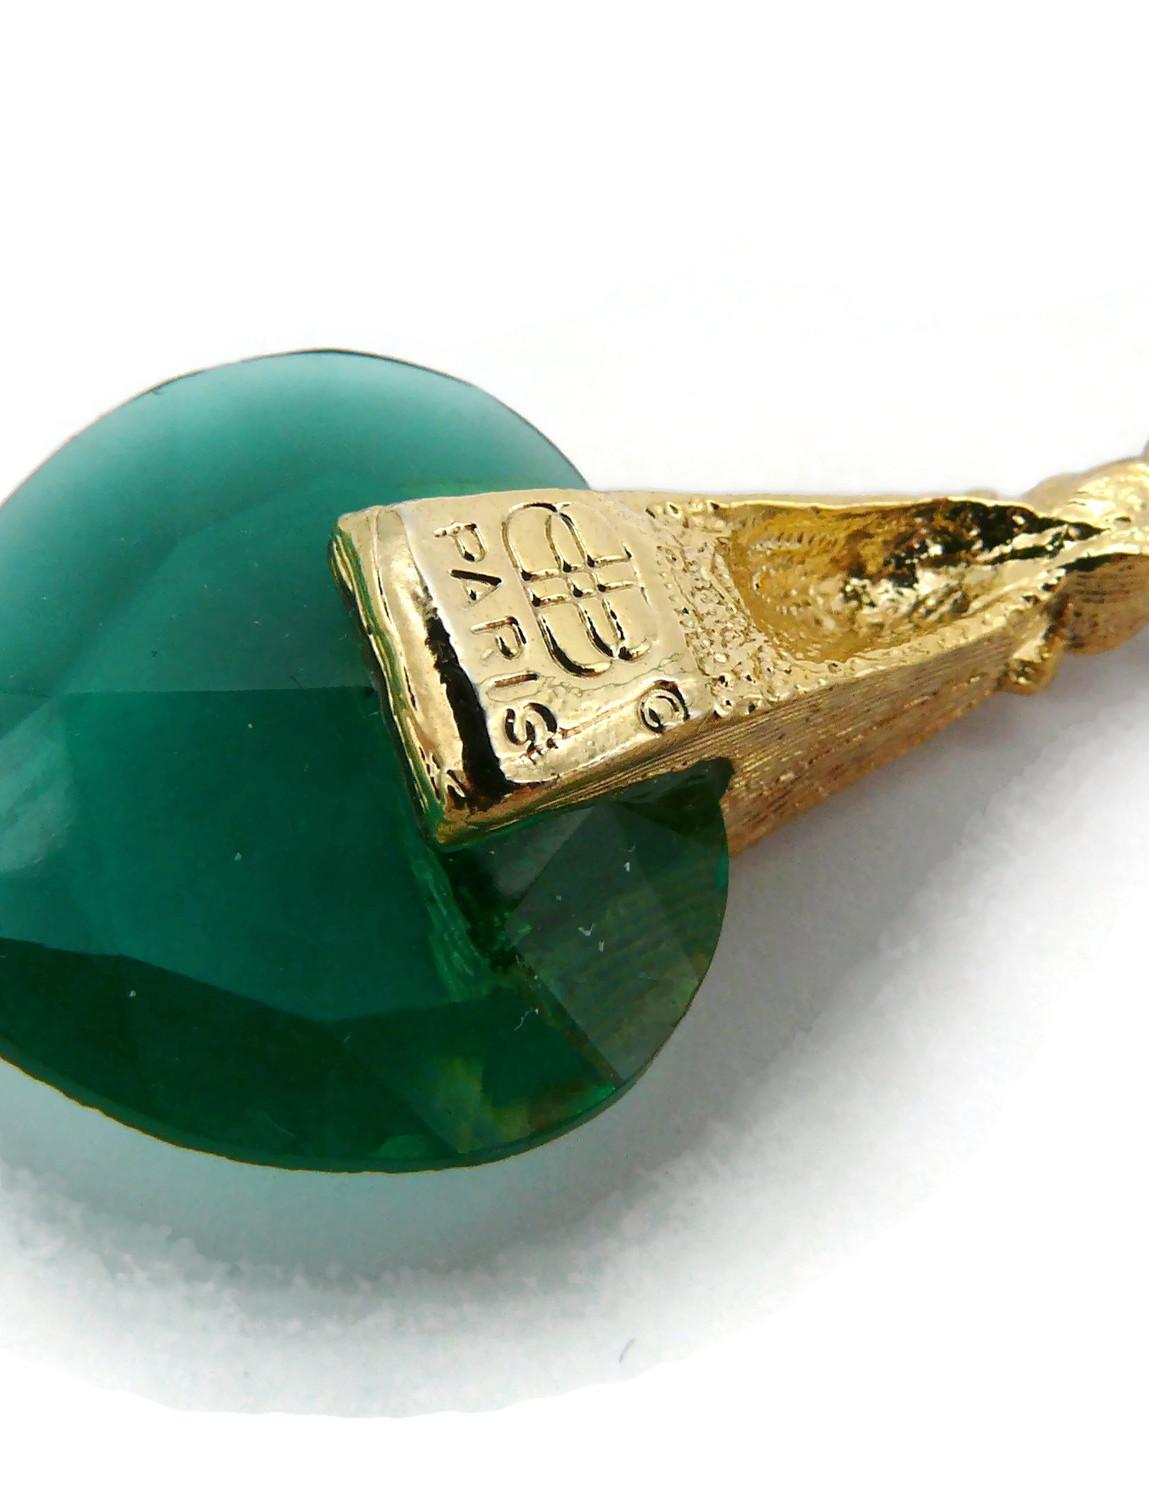 BALENCIAGA Vintage Gold Tone Green Glass Heart Dangling Earrings For Sale 2